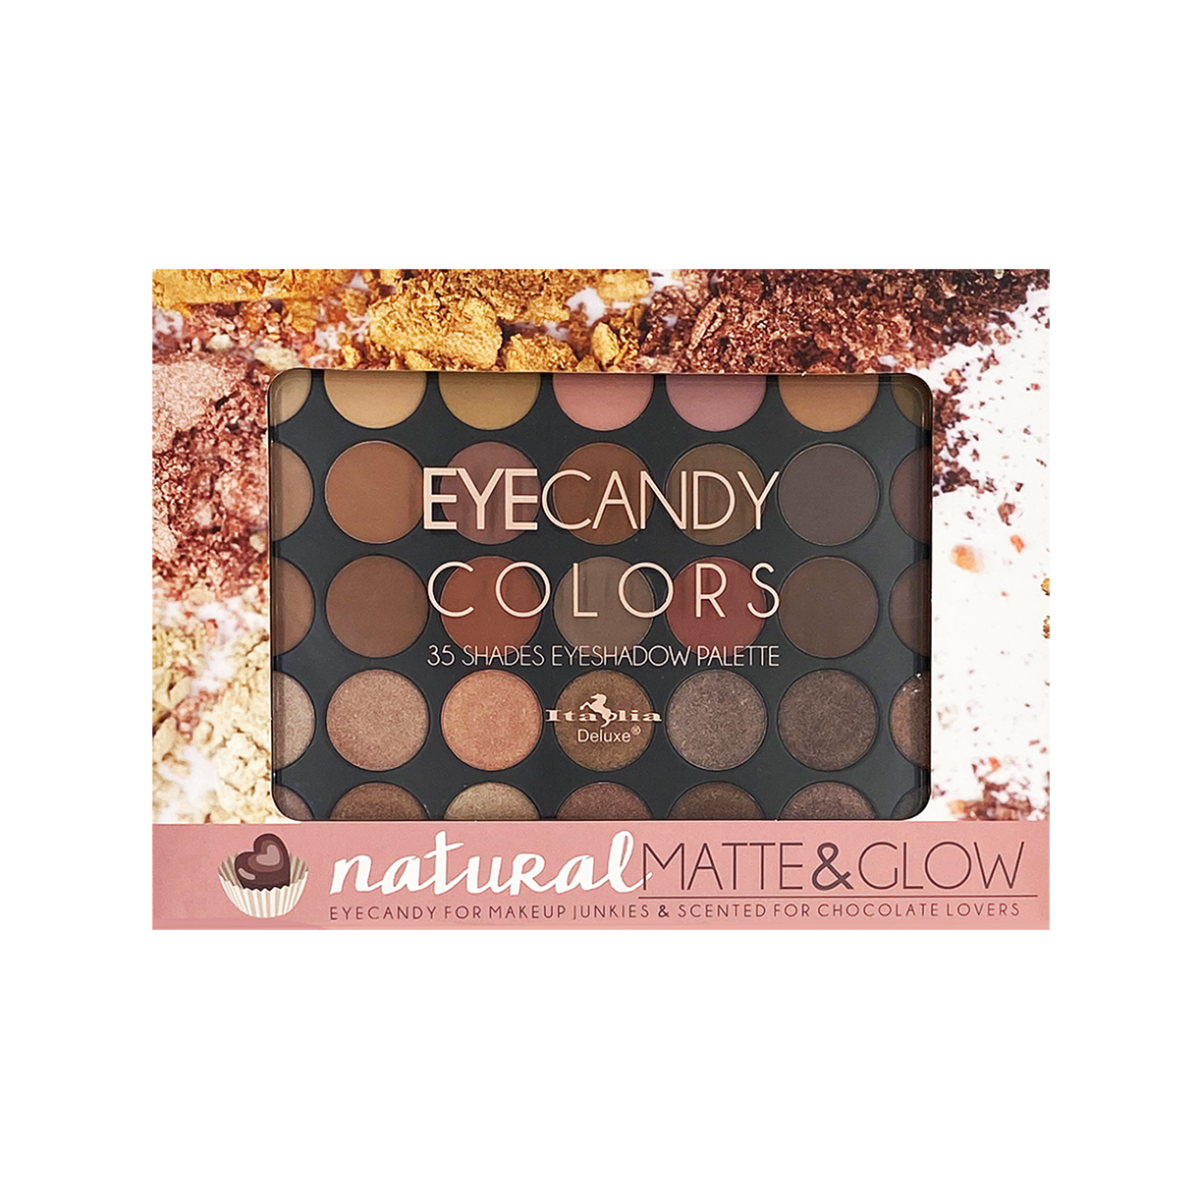 Eye Candy Colors Palette - Natural Matte & Glow